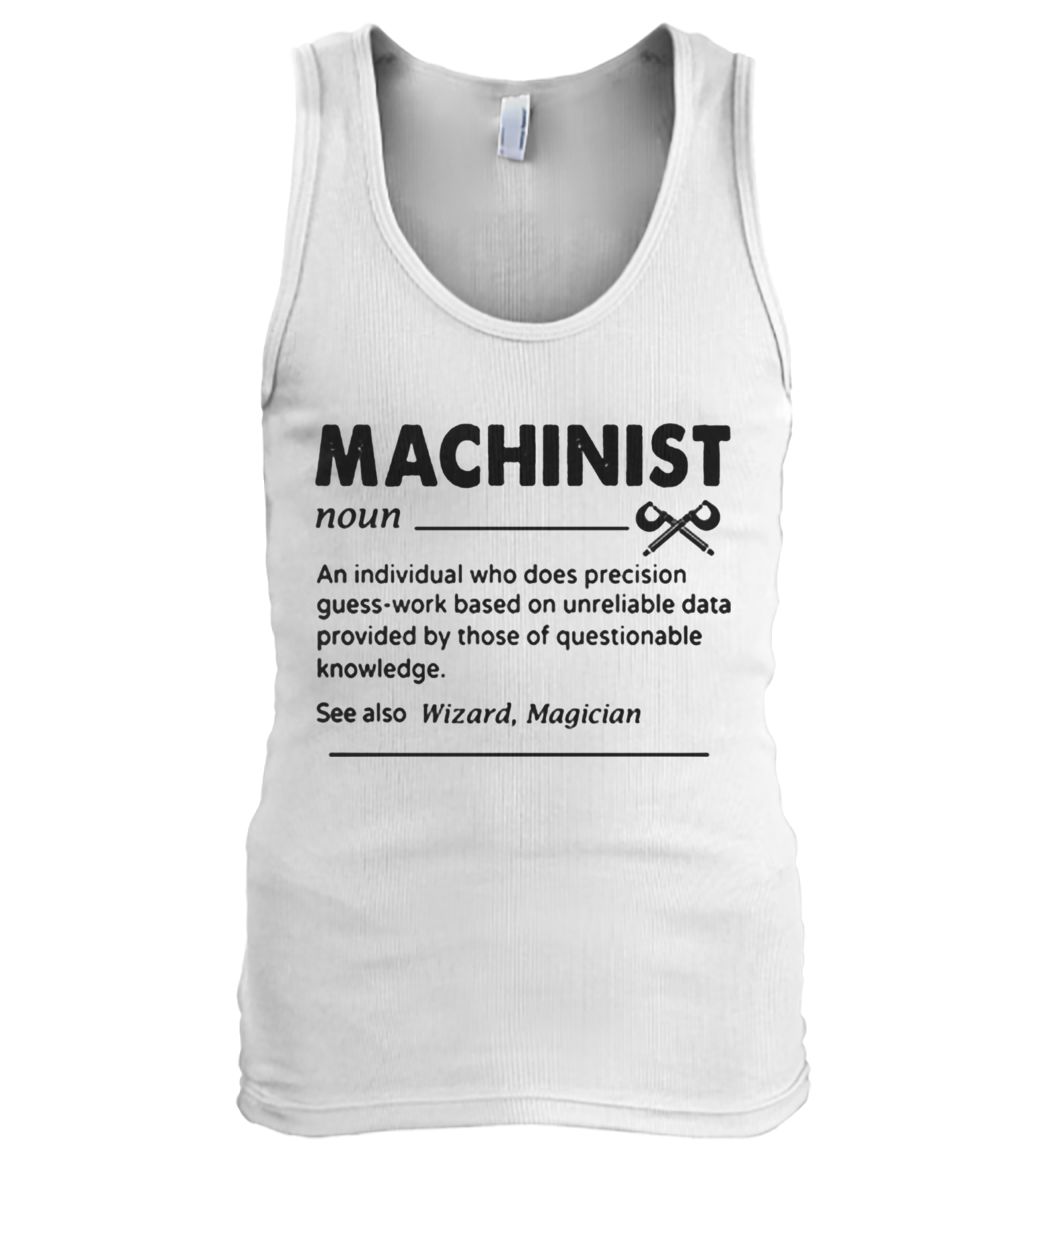 Machinist definition men's tank top